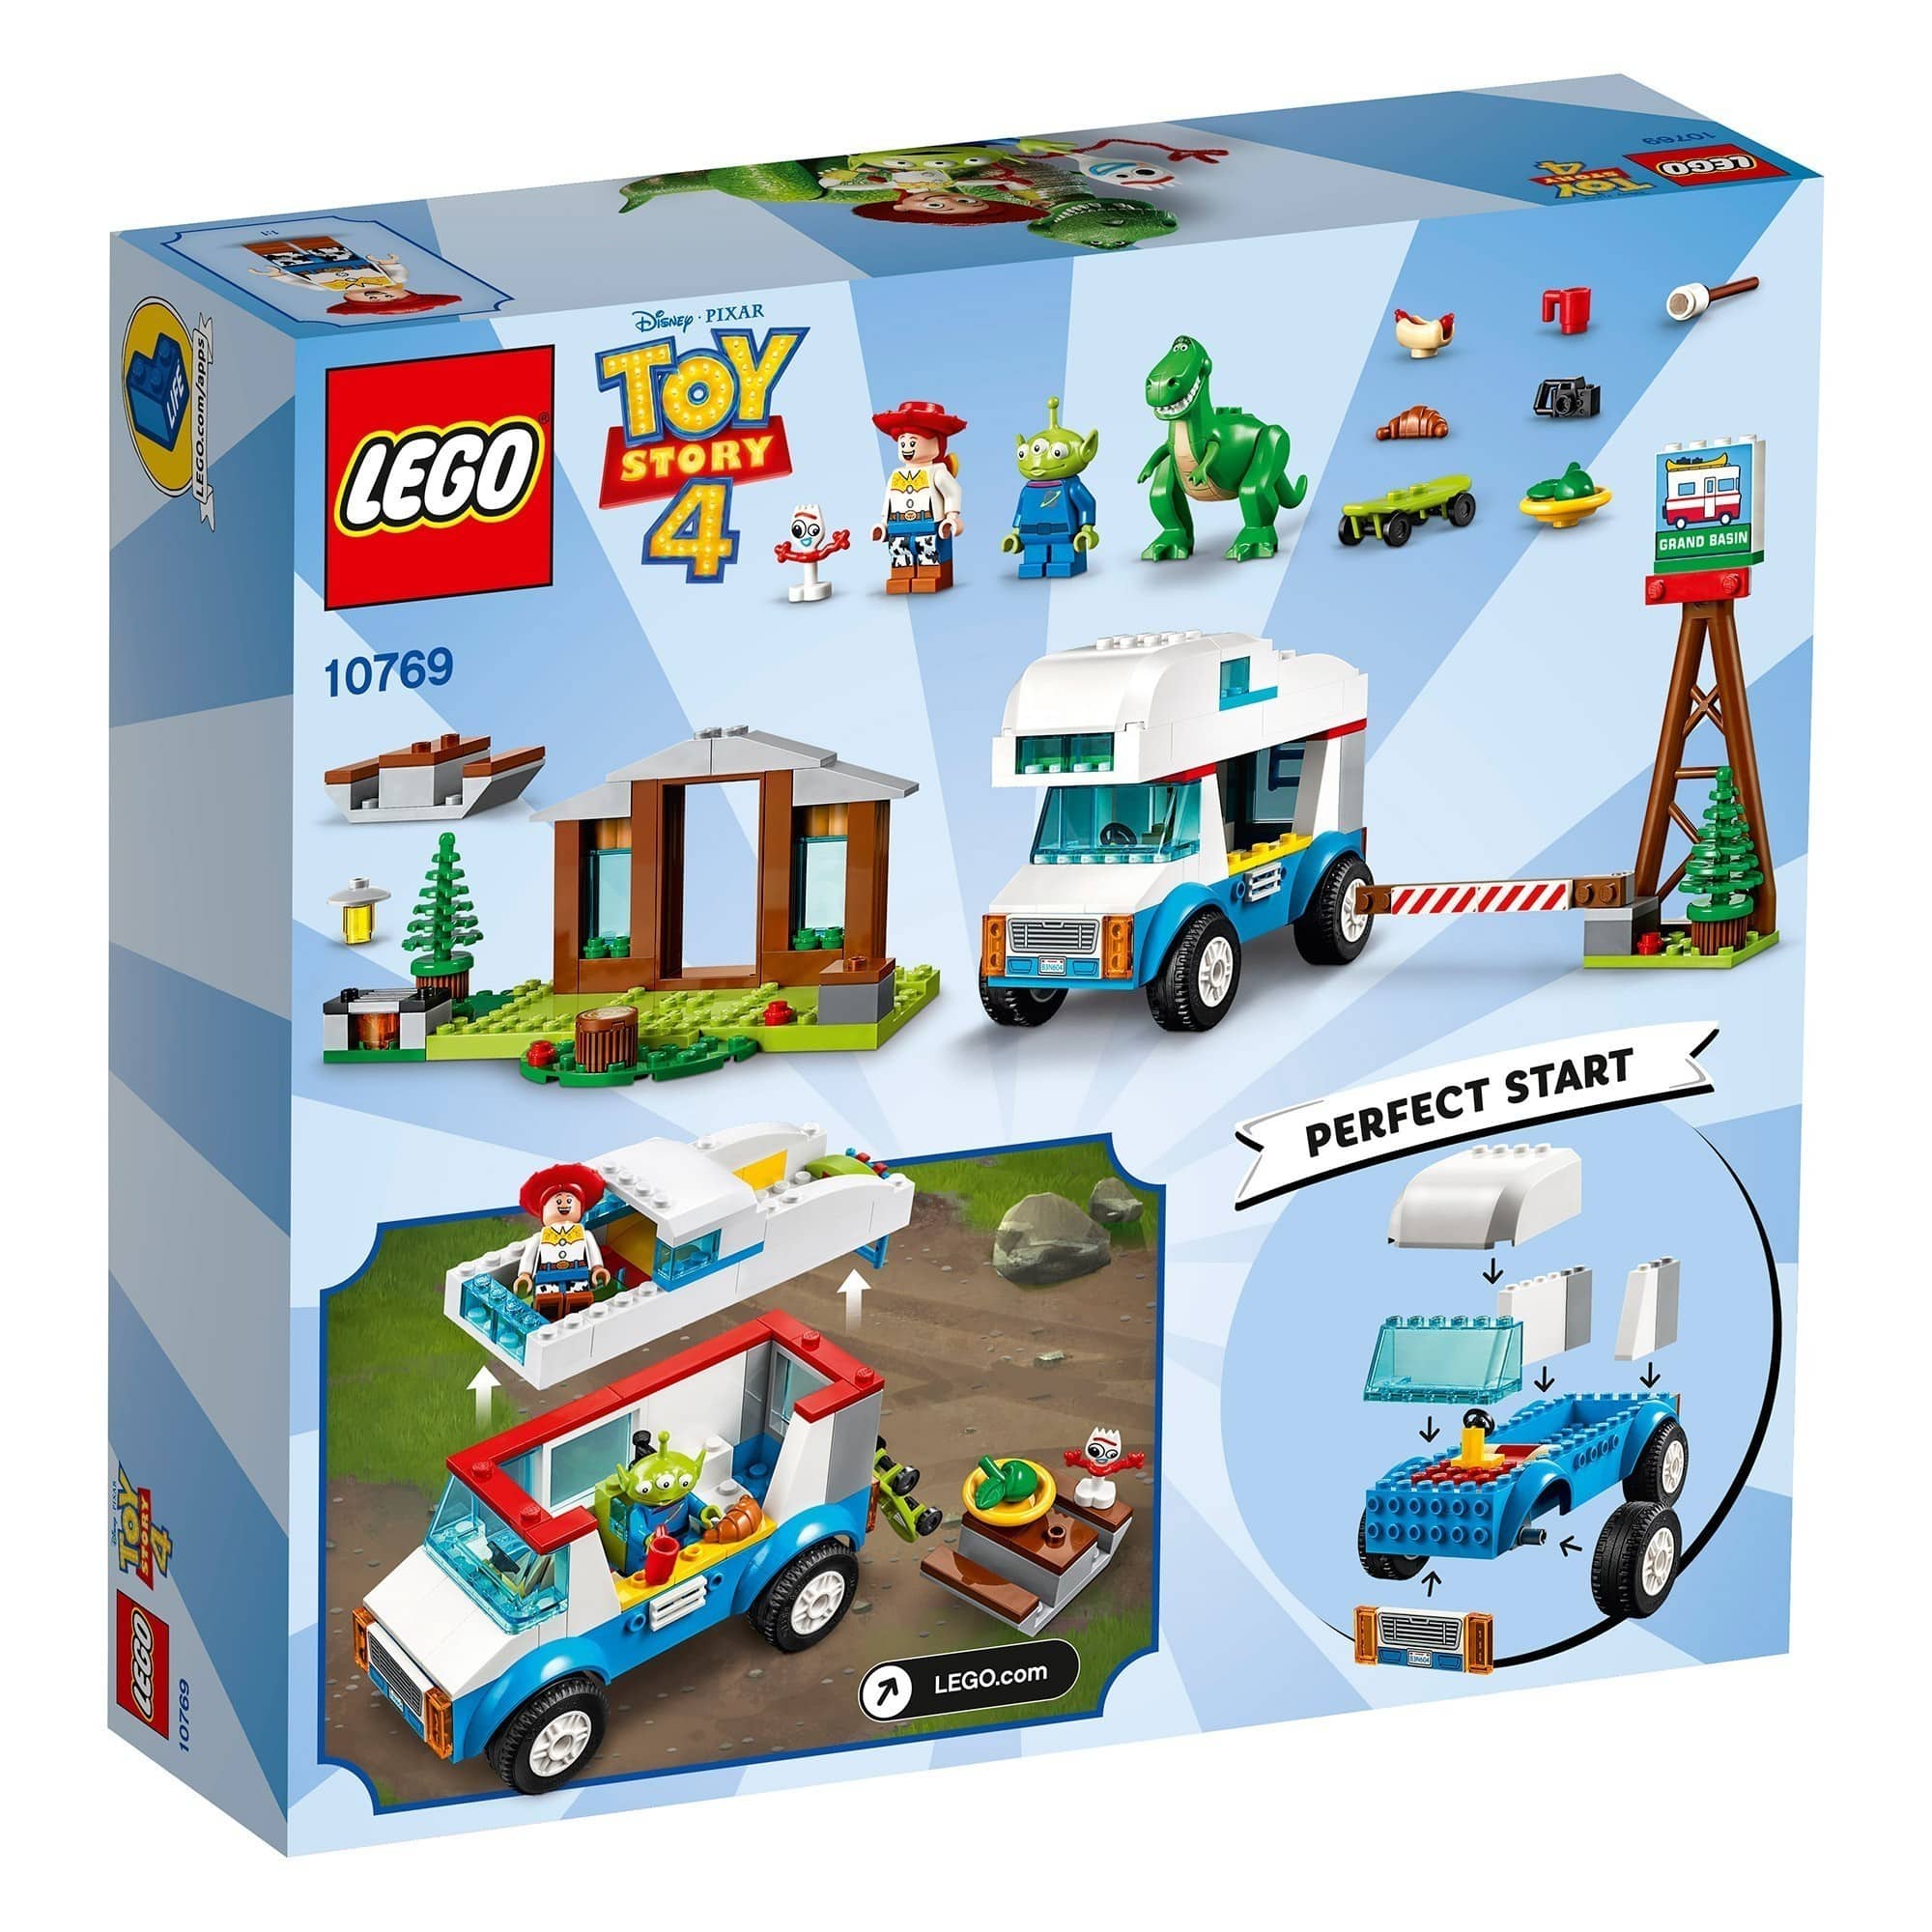 LEGO® - Toy Story 4 - 10769 Toy Story 4 RV Vacation